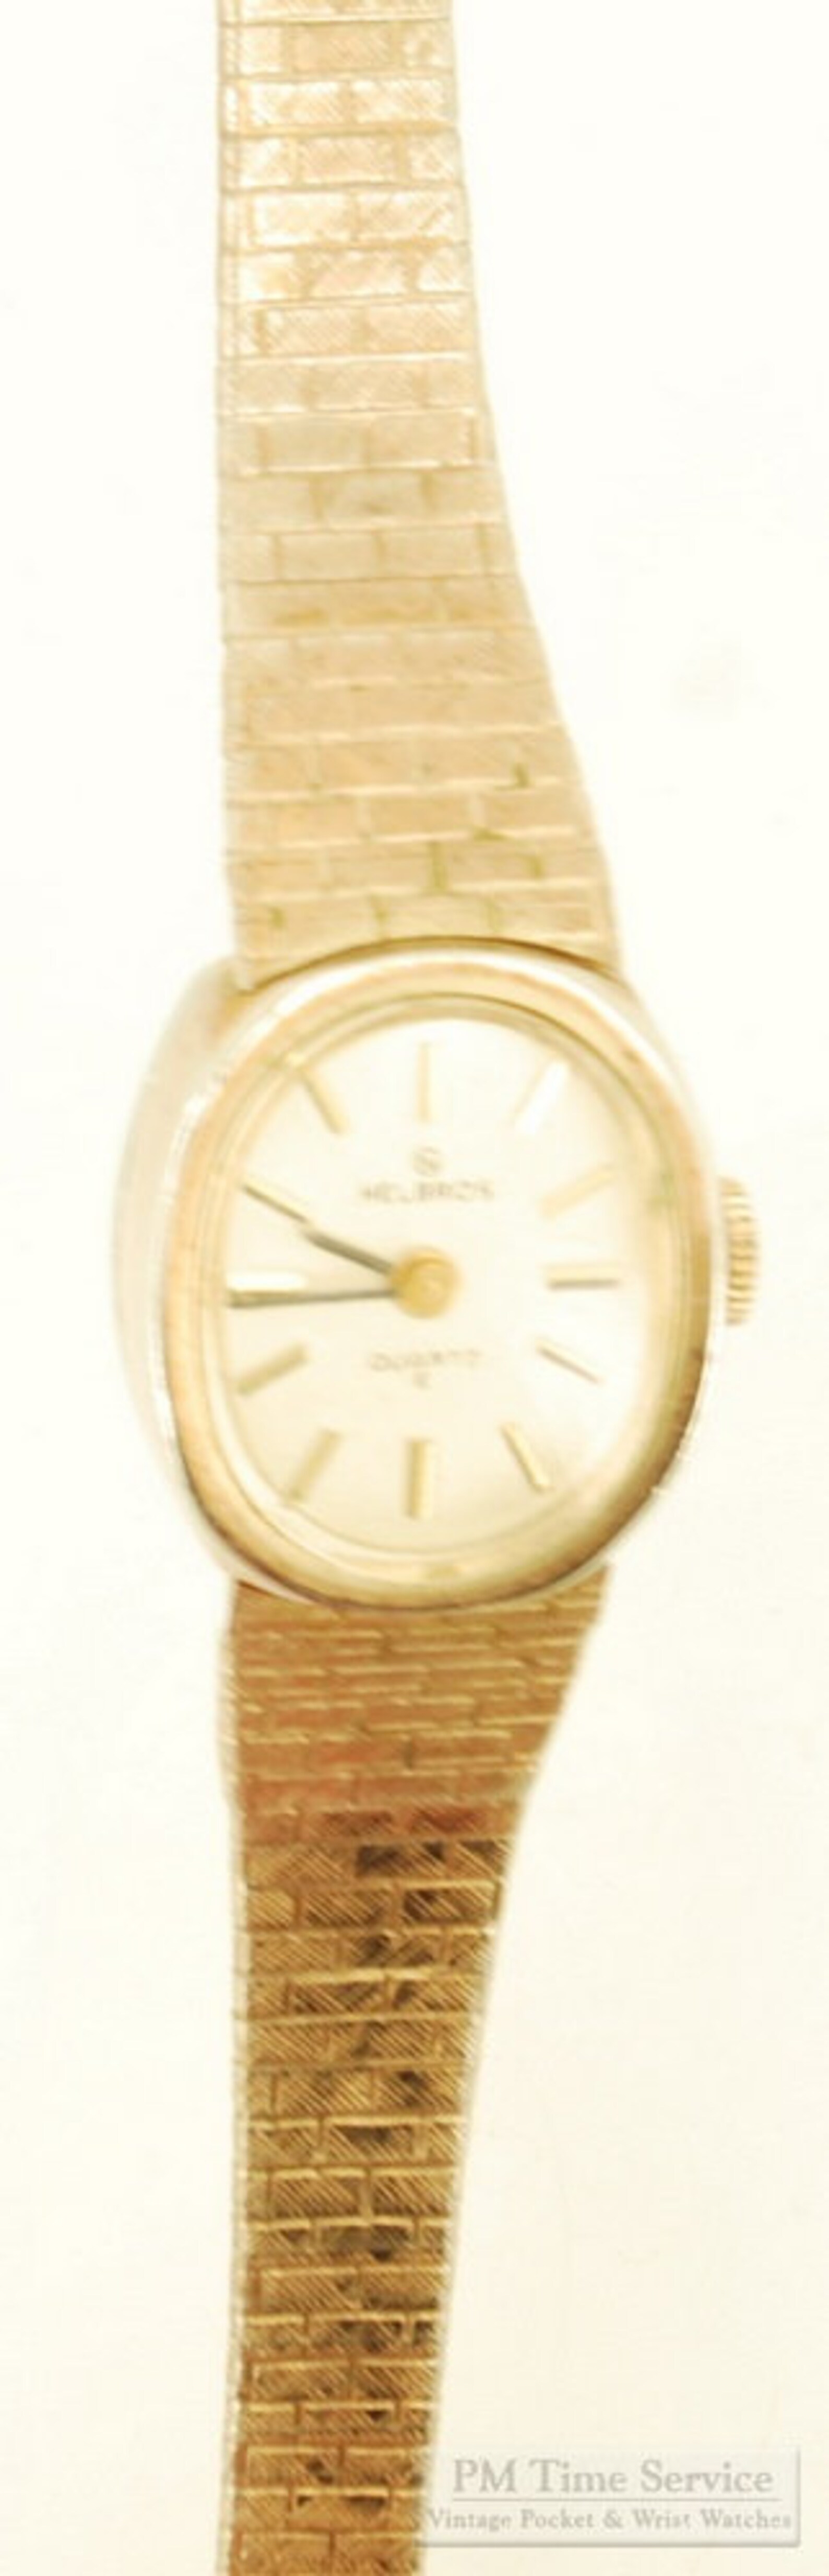 Helbros Quartz Ladies' Wrist Watch Elegant Gold-toned & | Etsy